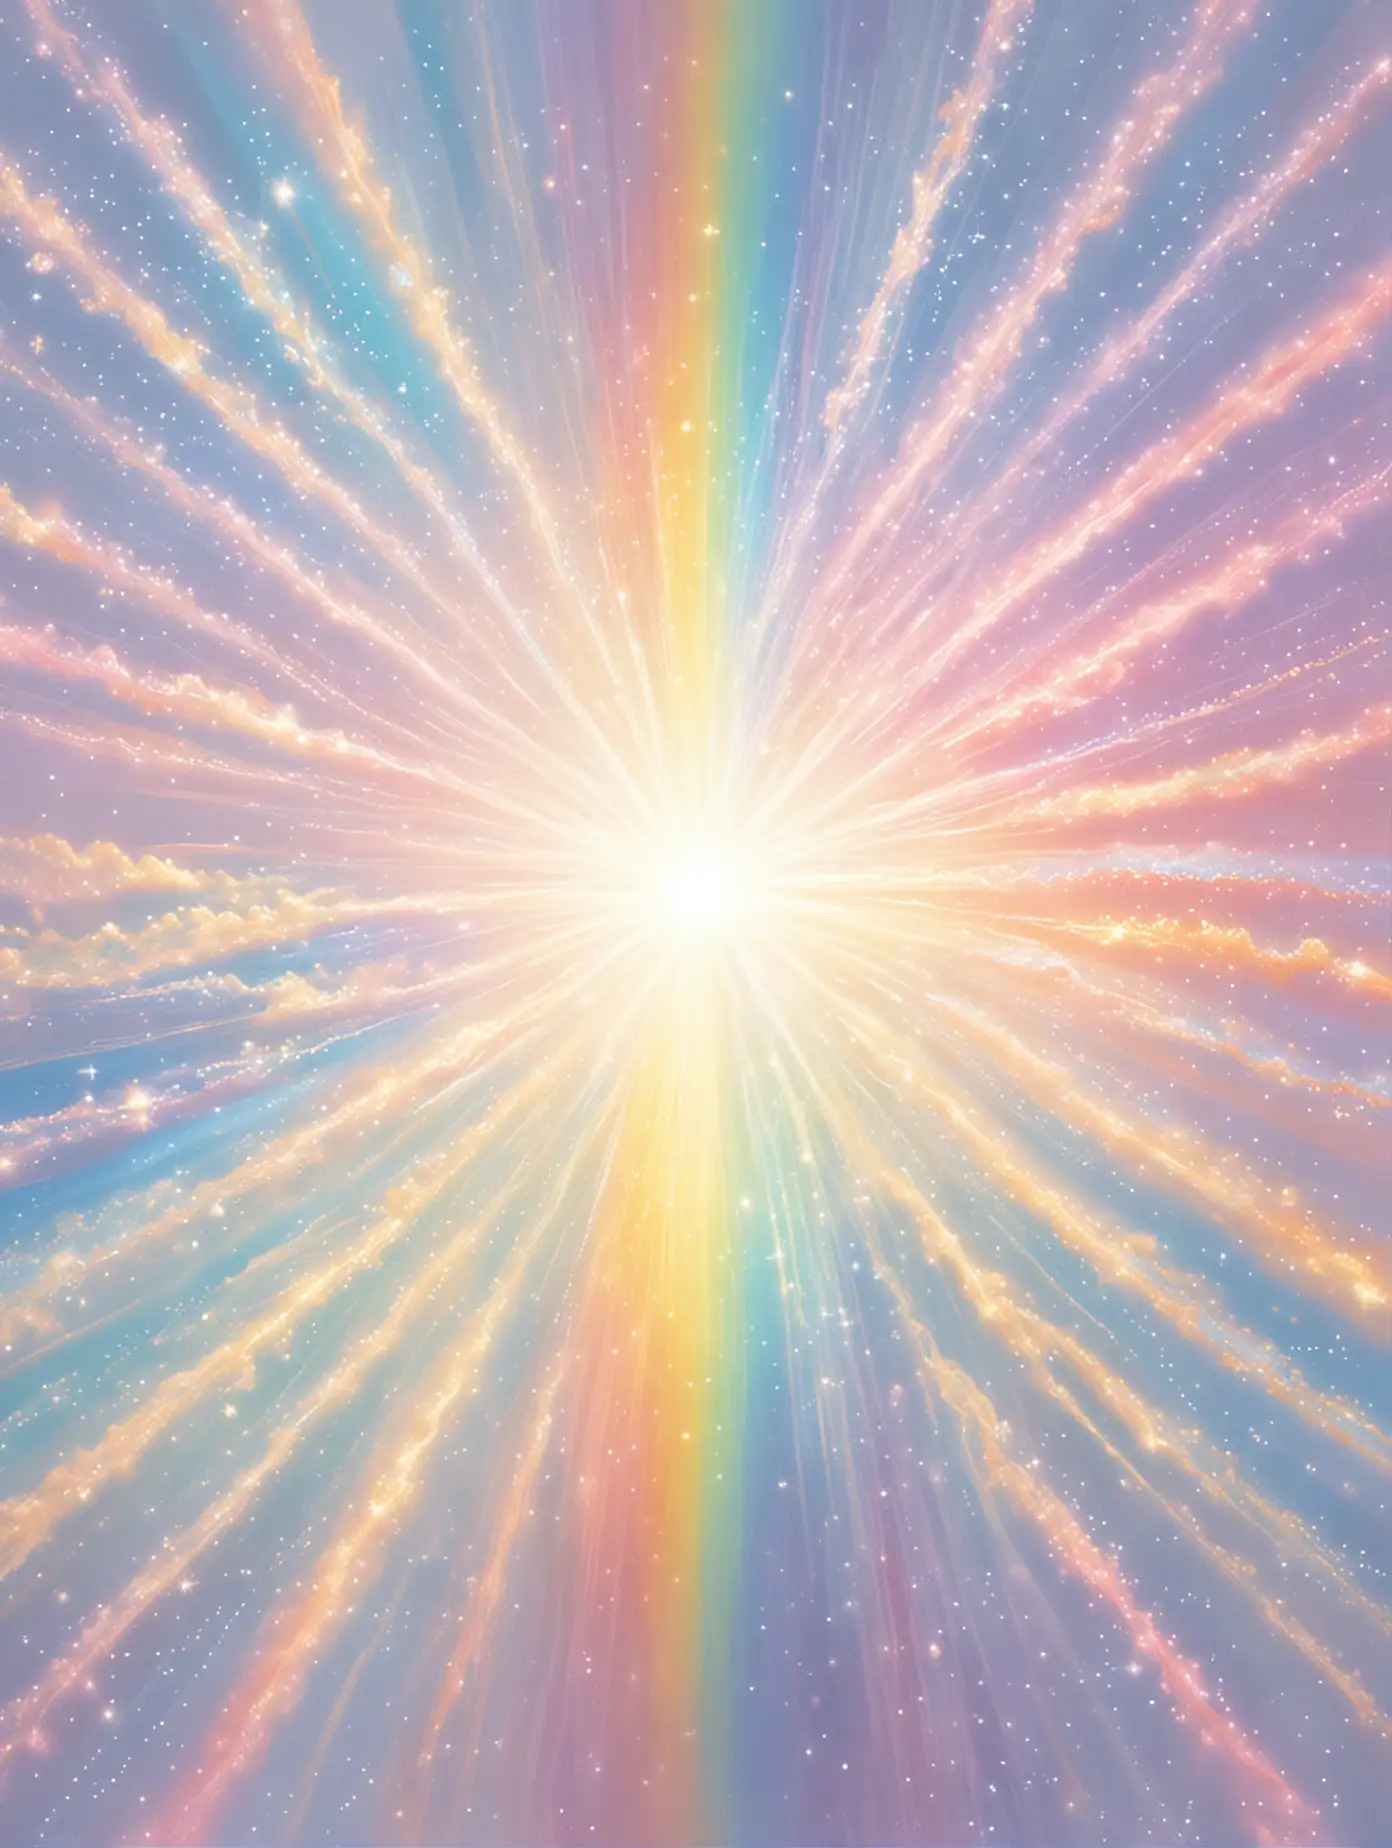 Divine Love and Rainbow Rays Bursting from Sunlight